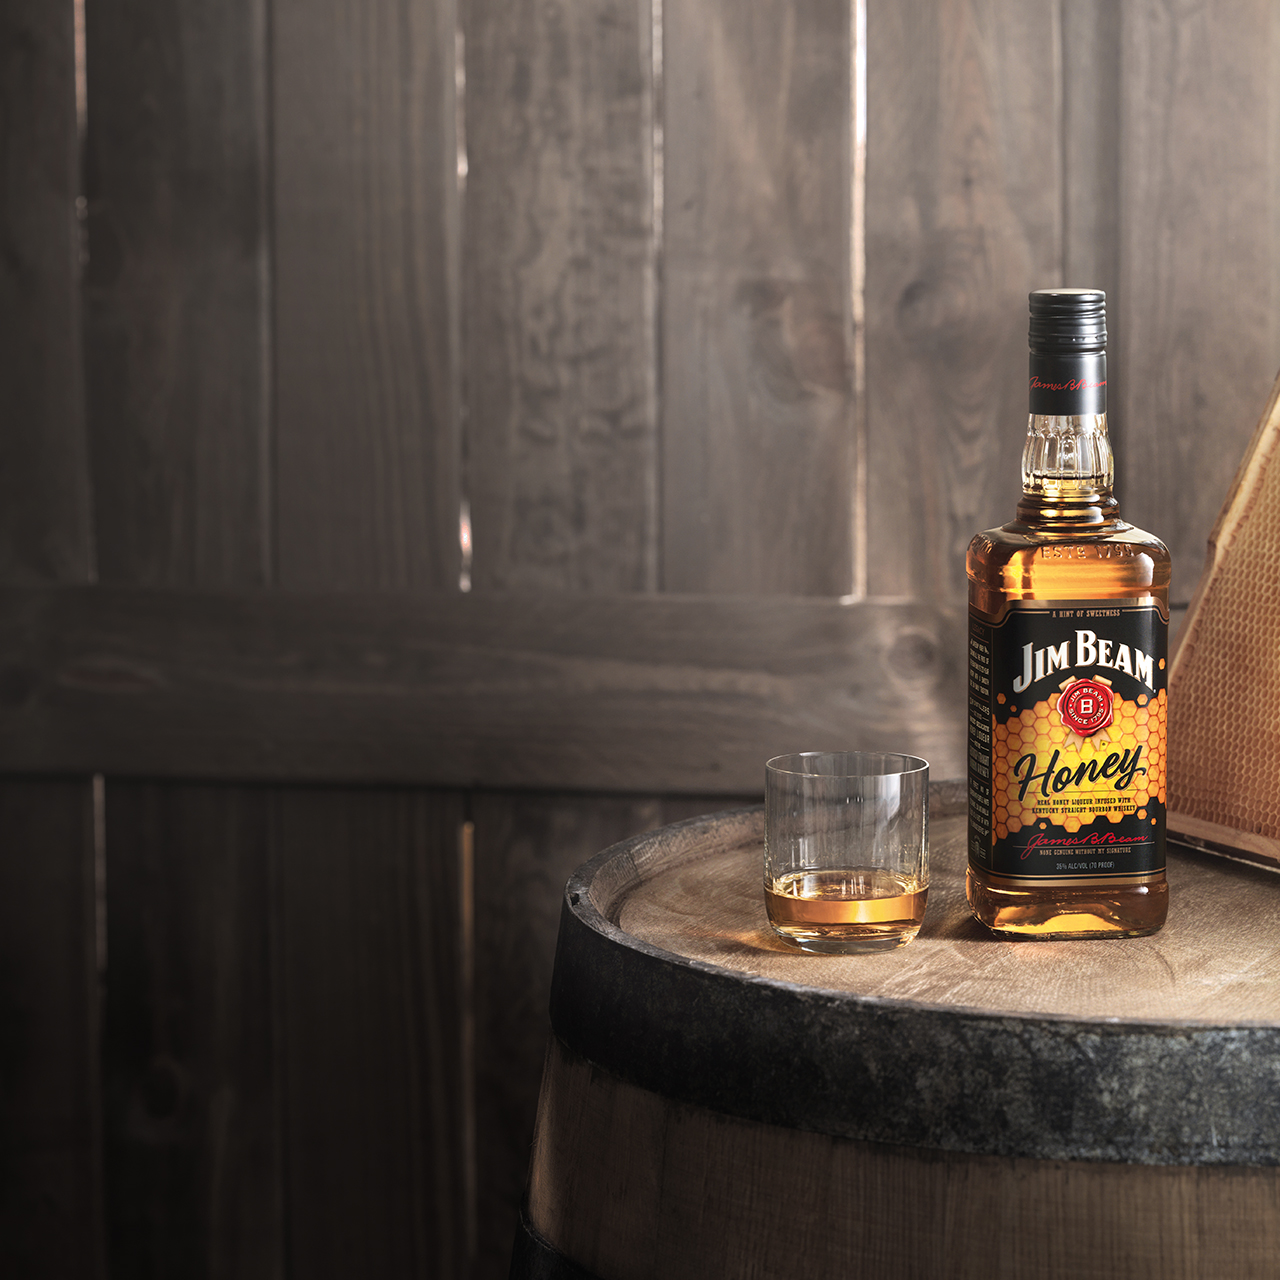 A Jim Beam® Honey bottle surrounded by stored Kentucky bourbon barrels.